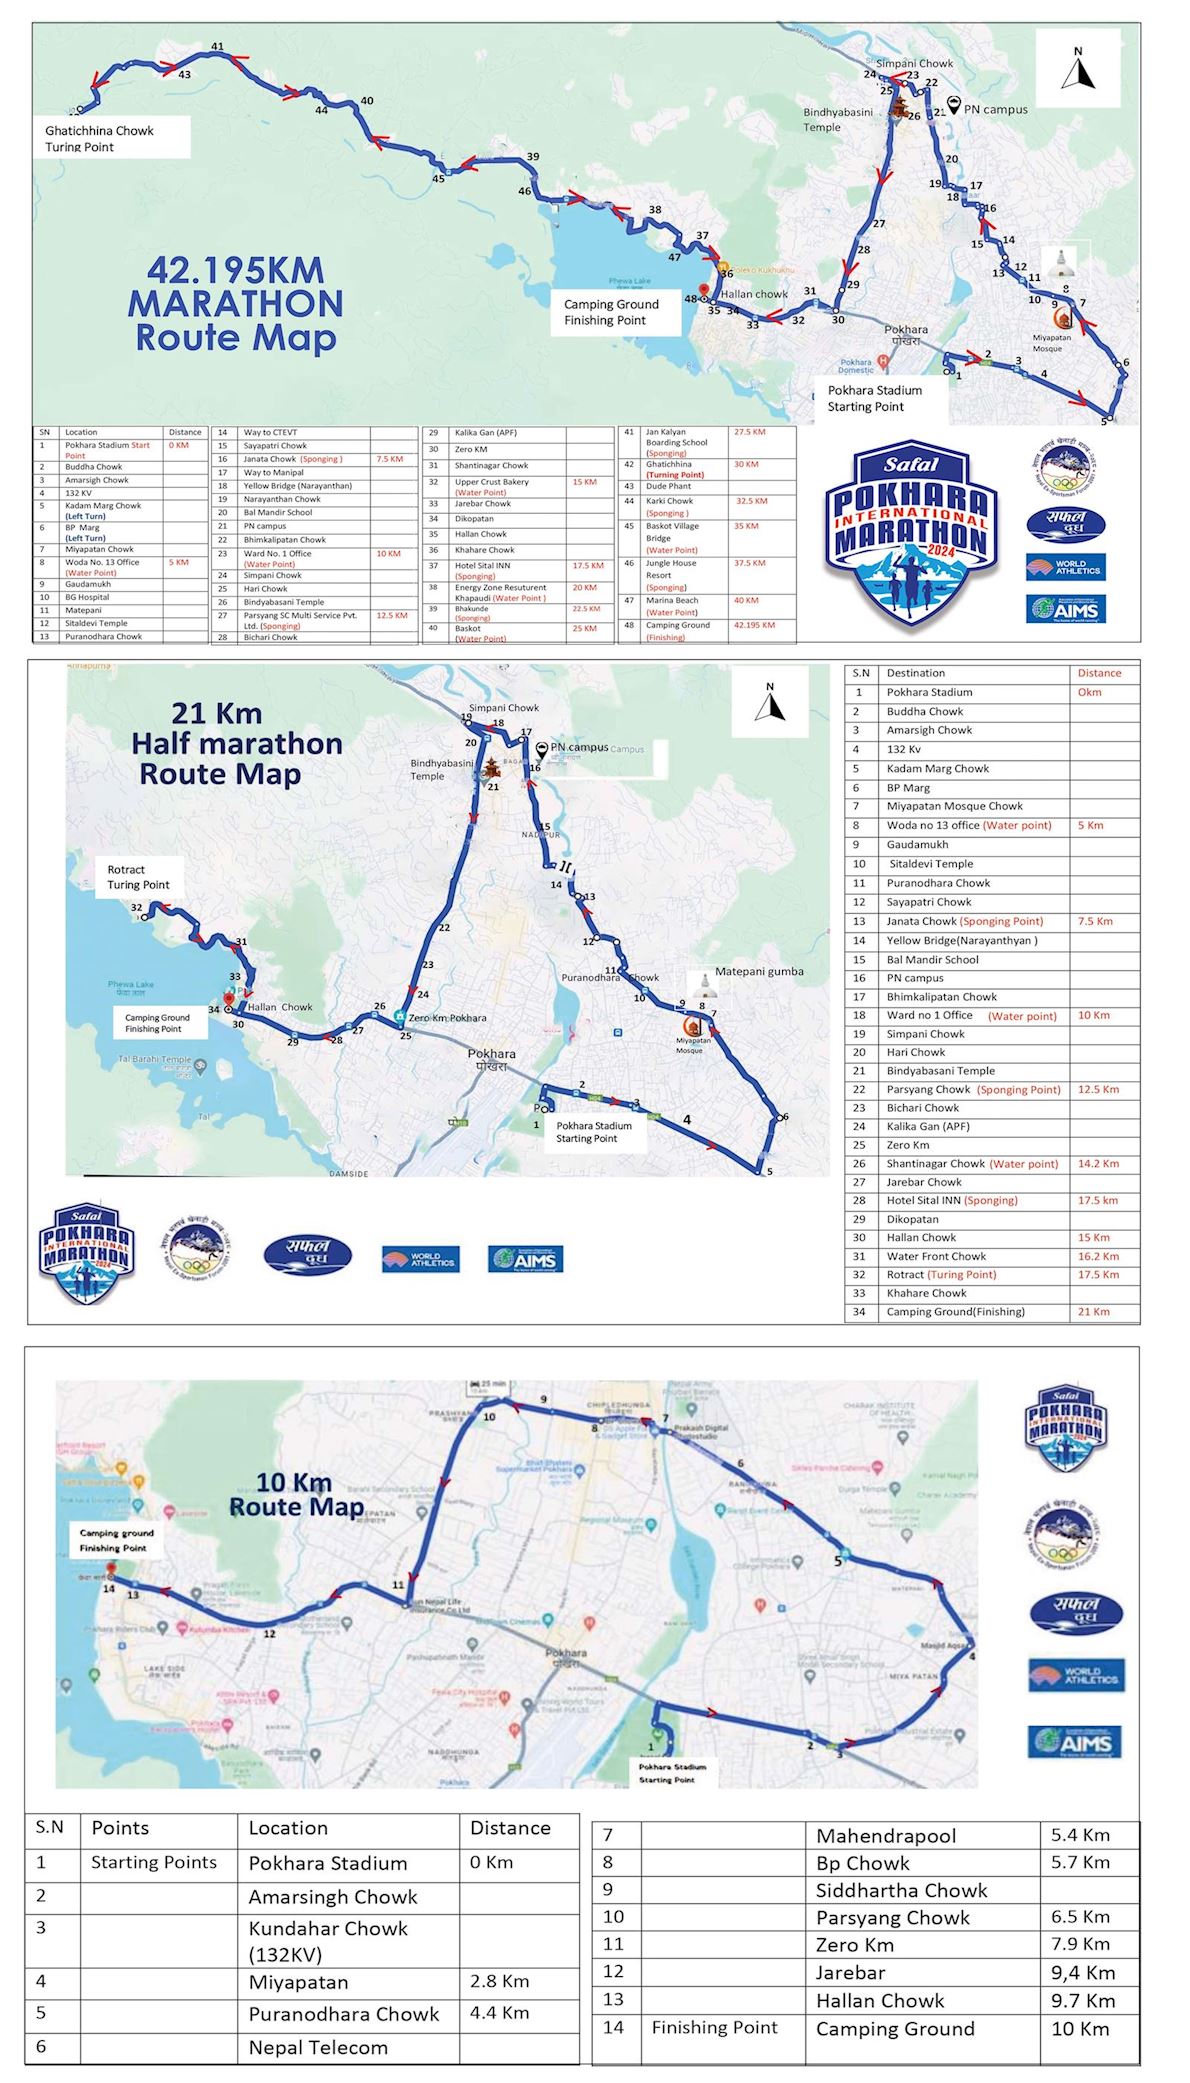 Pokhara International Marathon Mappa del percorso